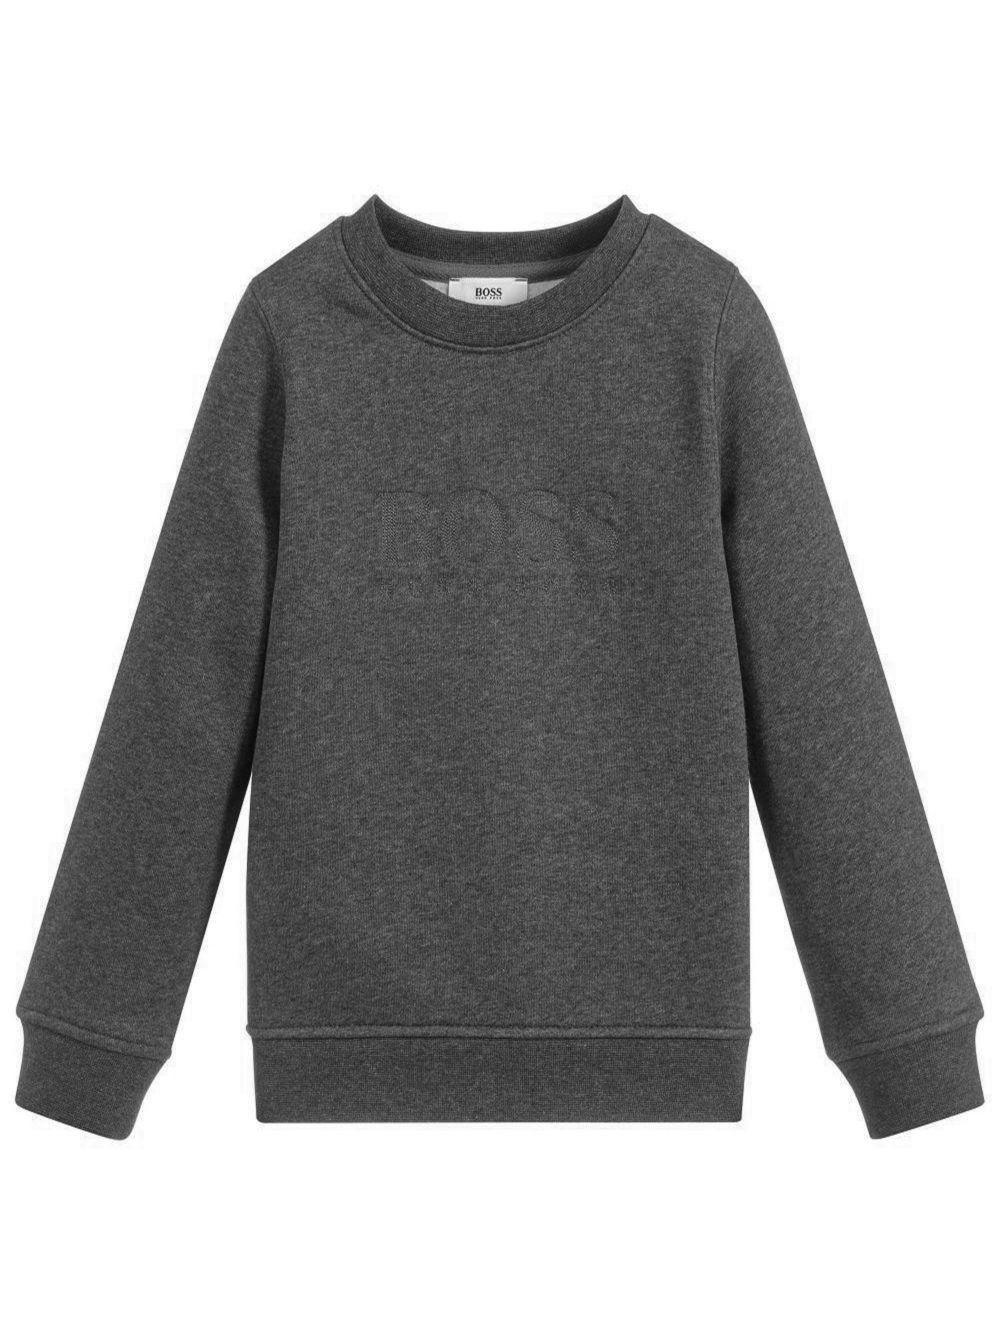 Dark Grey Logo - Hugo Boss Grey Sweatshirt. Designerwear. BLACK FRIDAY 2018